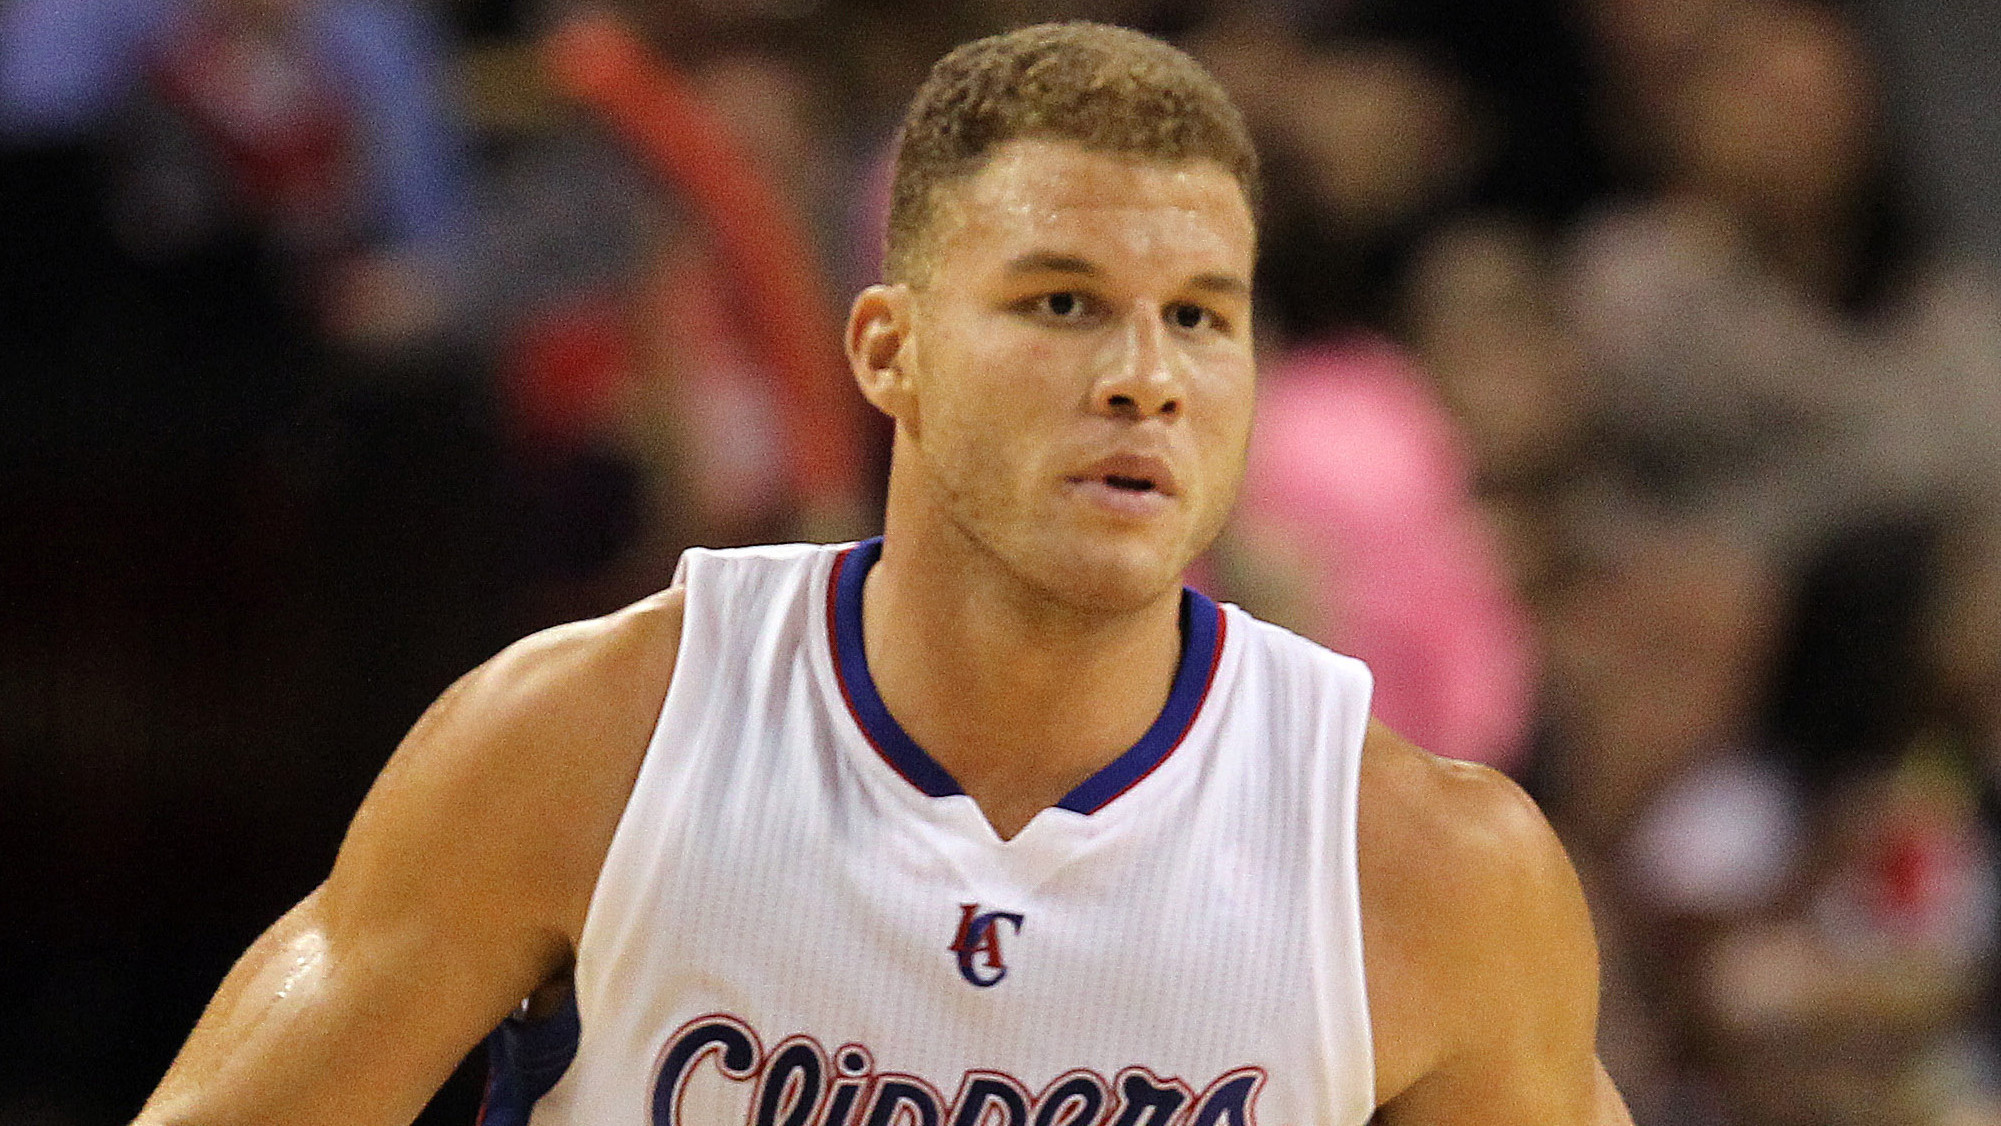 Clippers' Doc Rivers: 'I trust Blake' Griffin regarding alleged assault